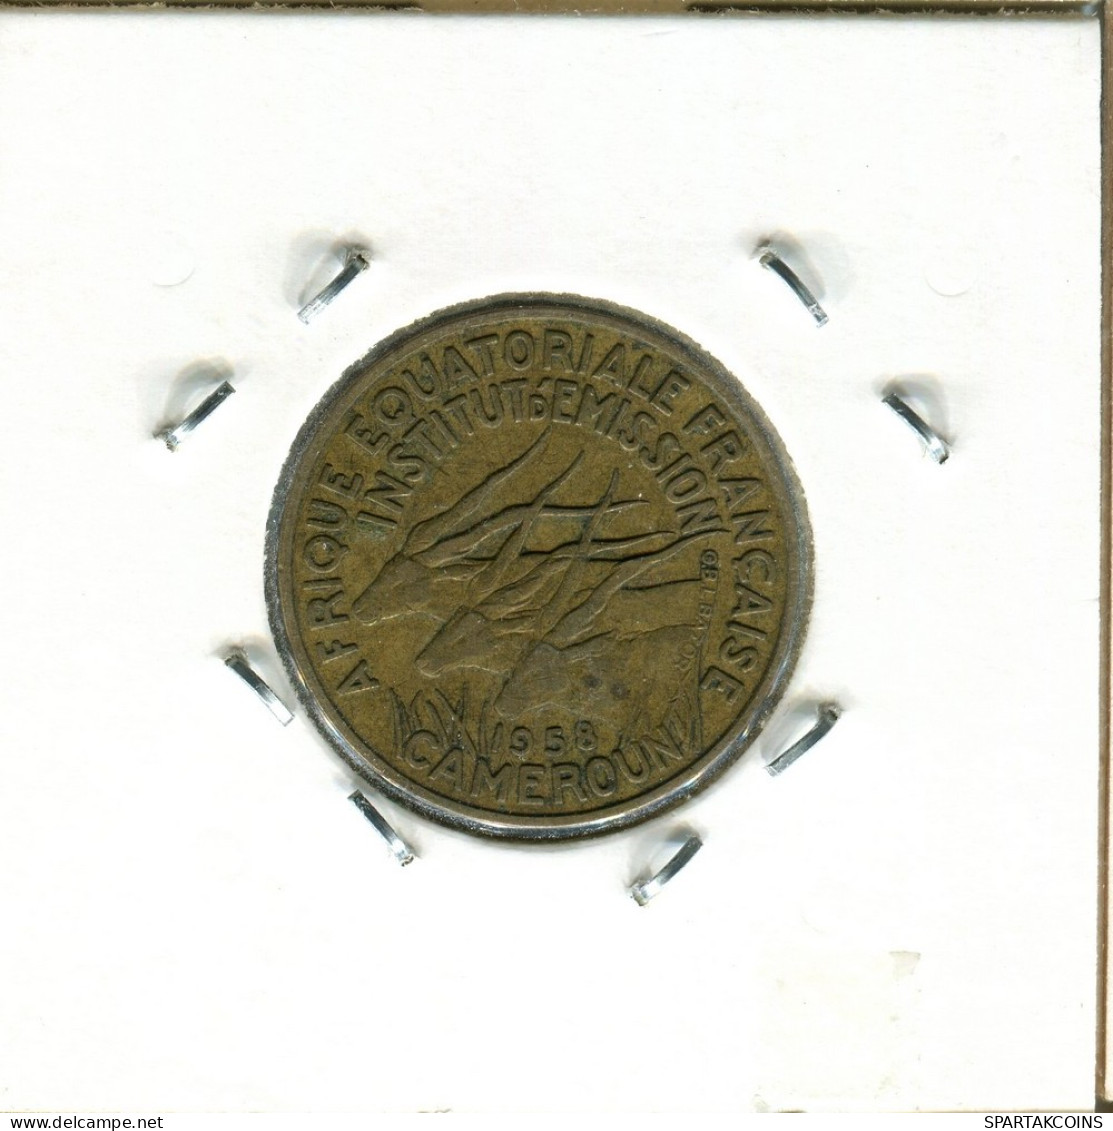 10 FRANCS 1958 CAMEROON Coin #AS324.U - Kameroen